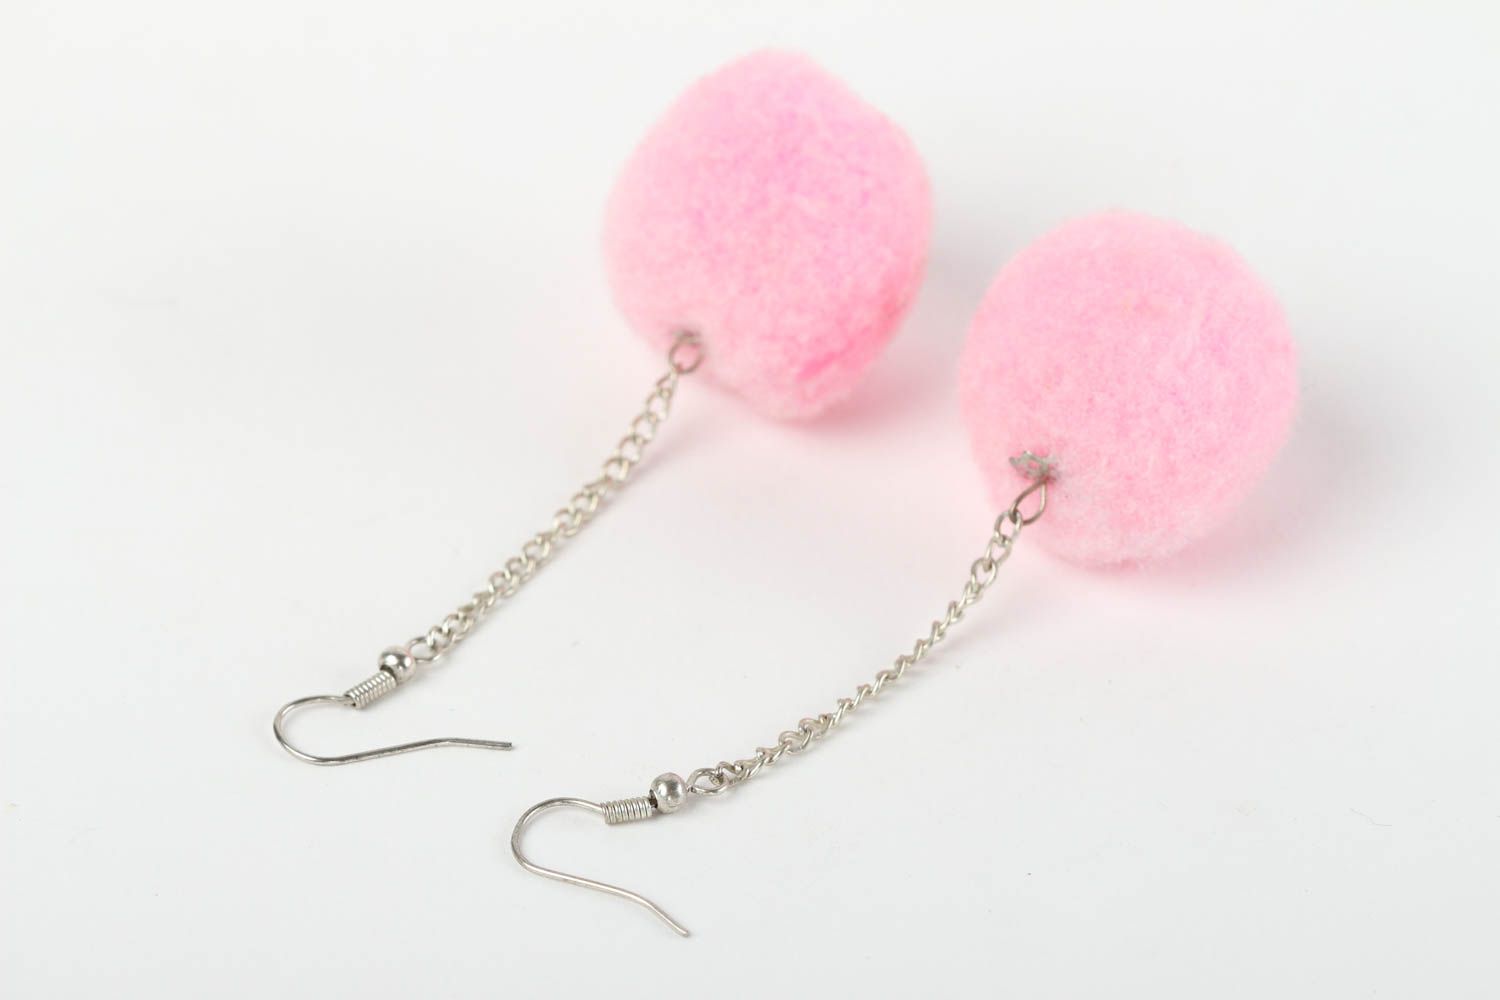 Designer handmade earrings stylish cute accessories unusual pink jewelry photo 4